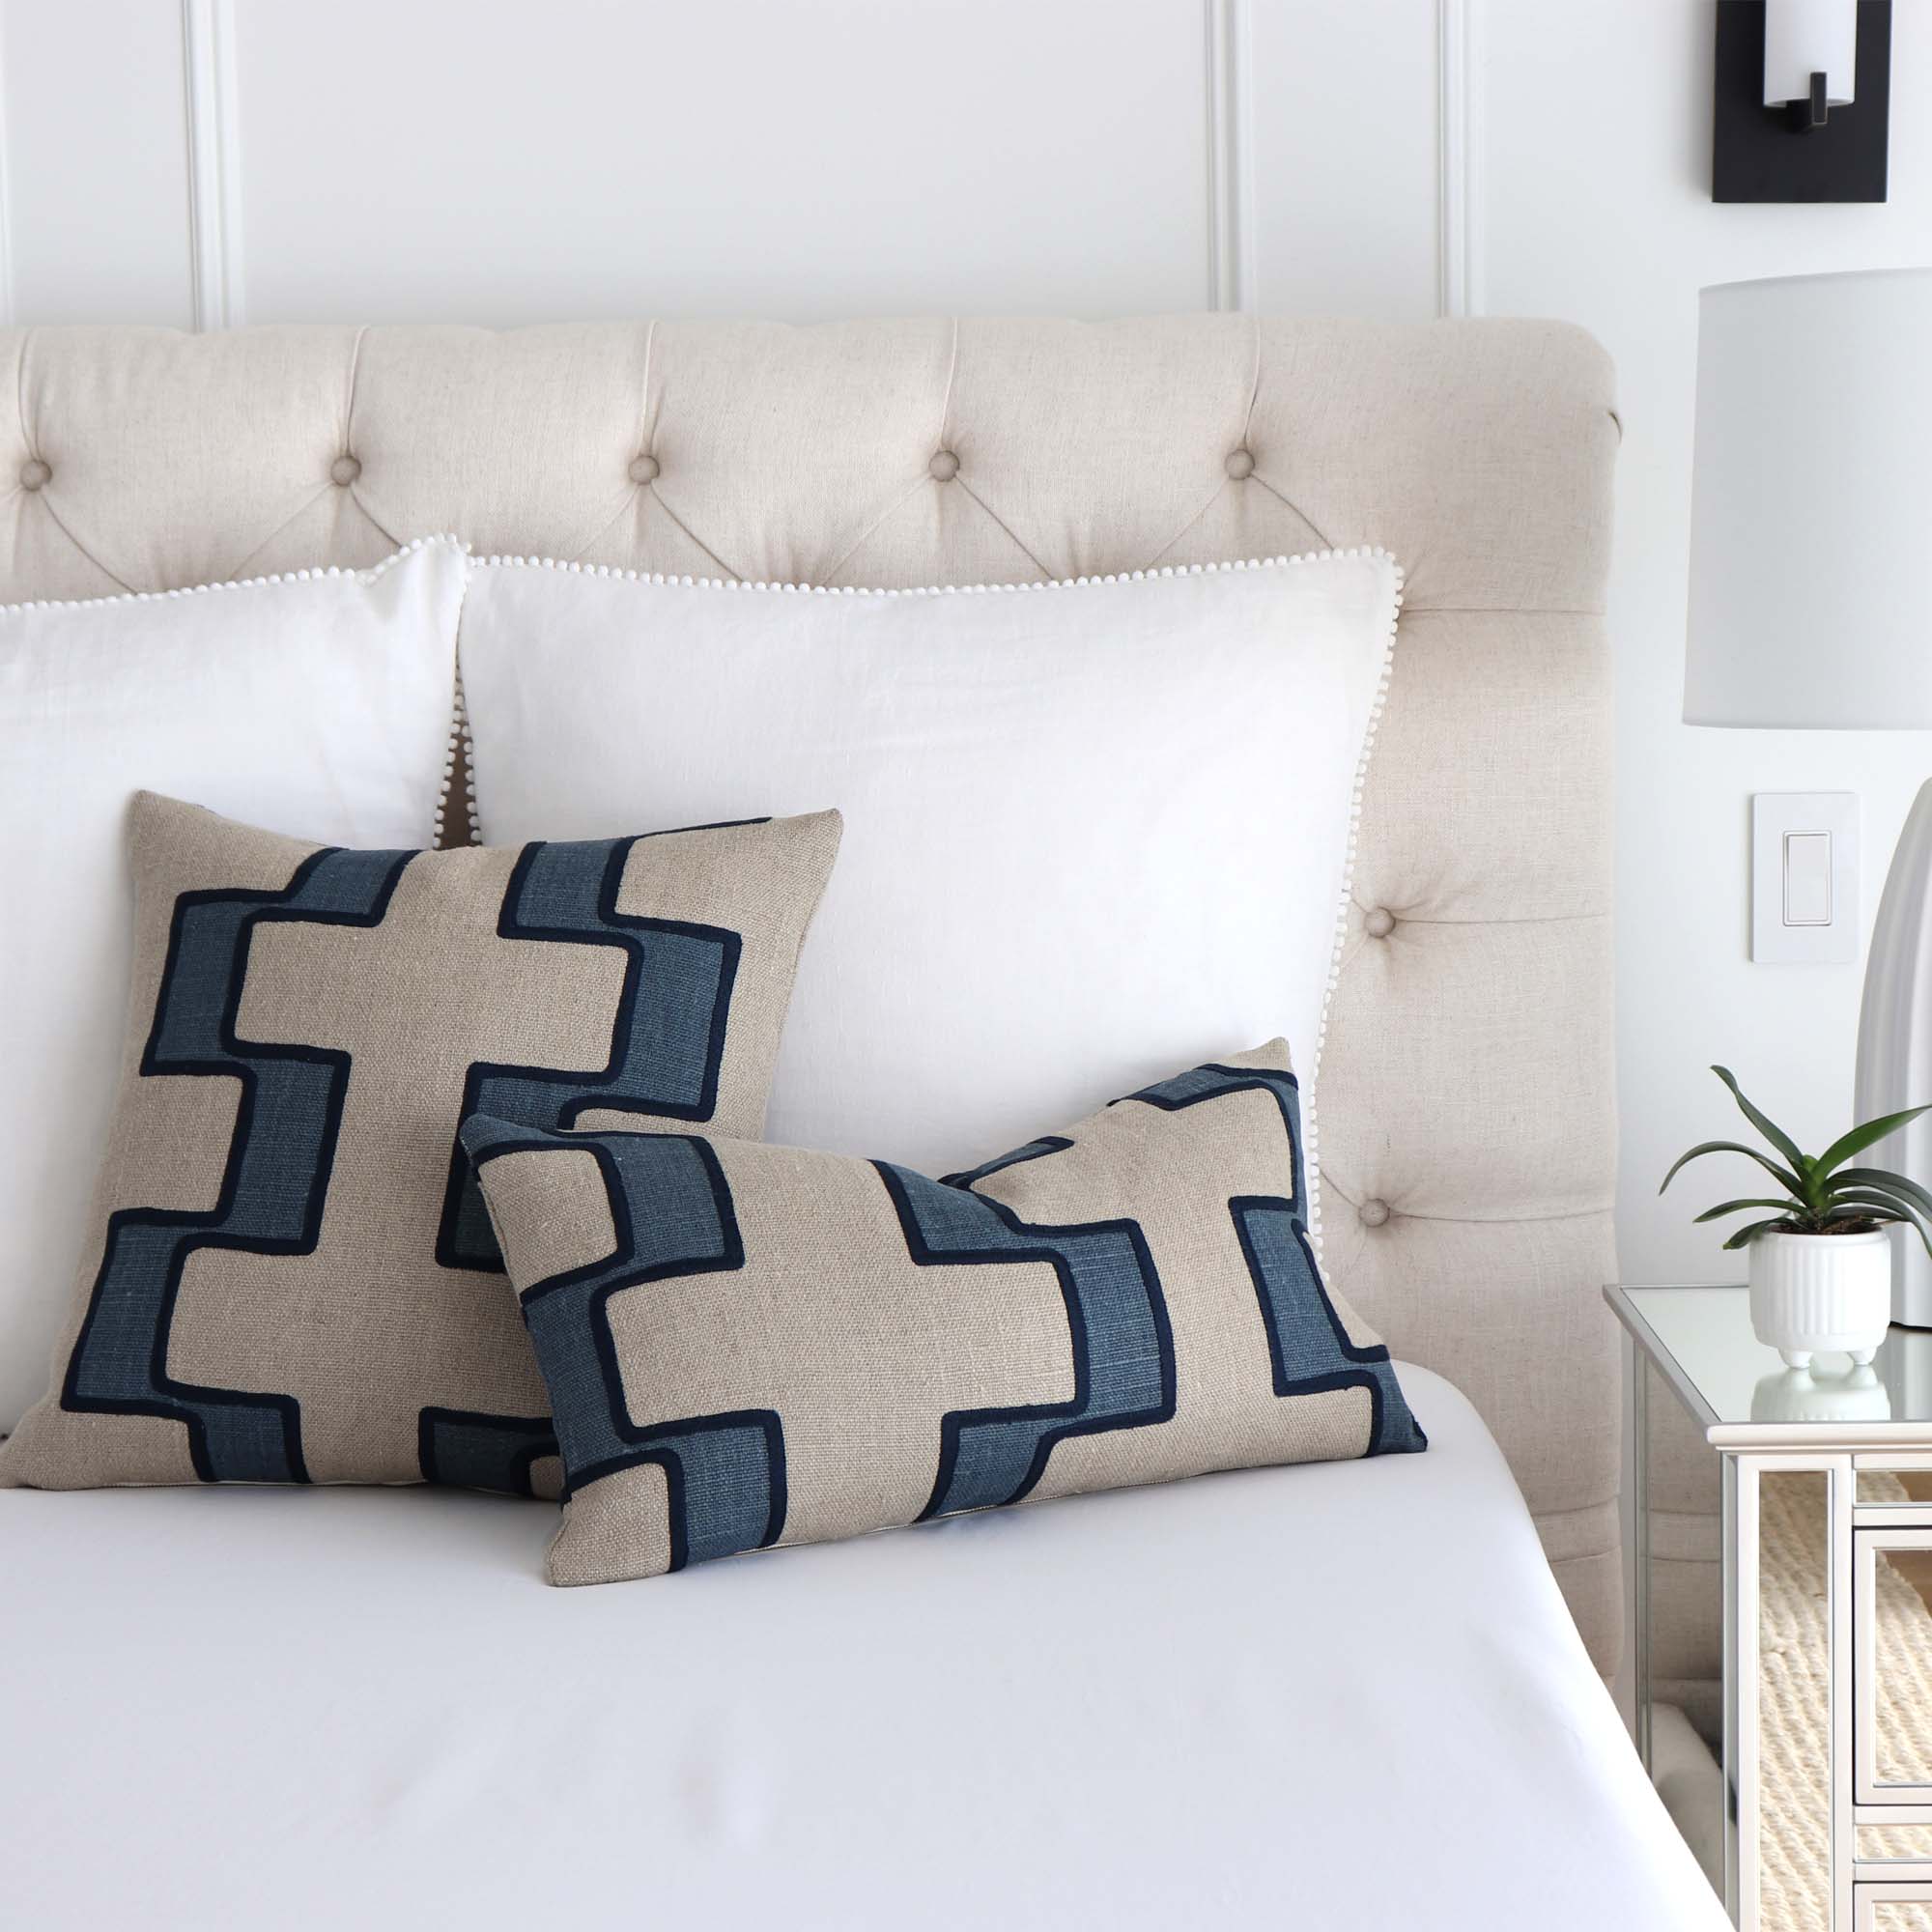 Schumacher Dixon Embroidered Blue Linen Luxury Designer Throw Pillow Cover